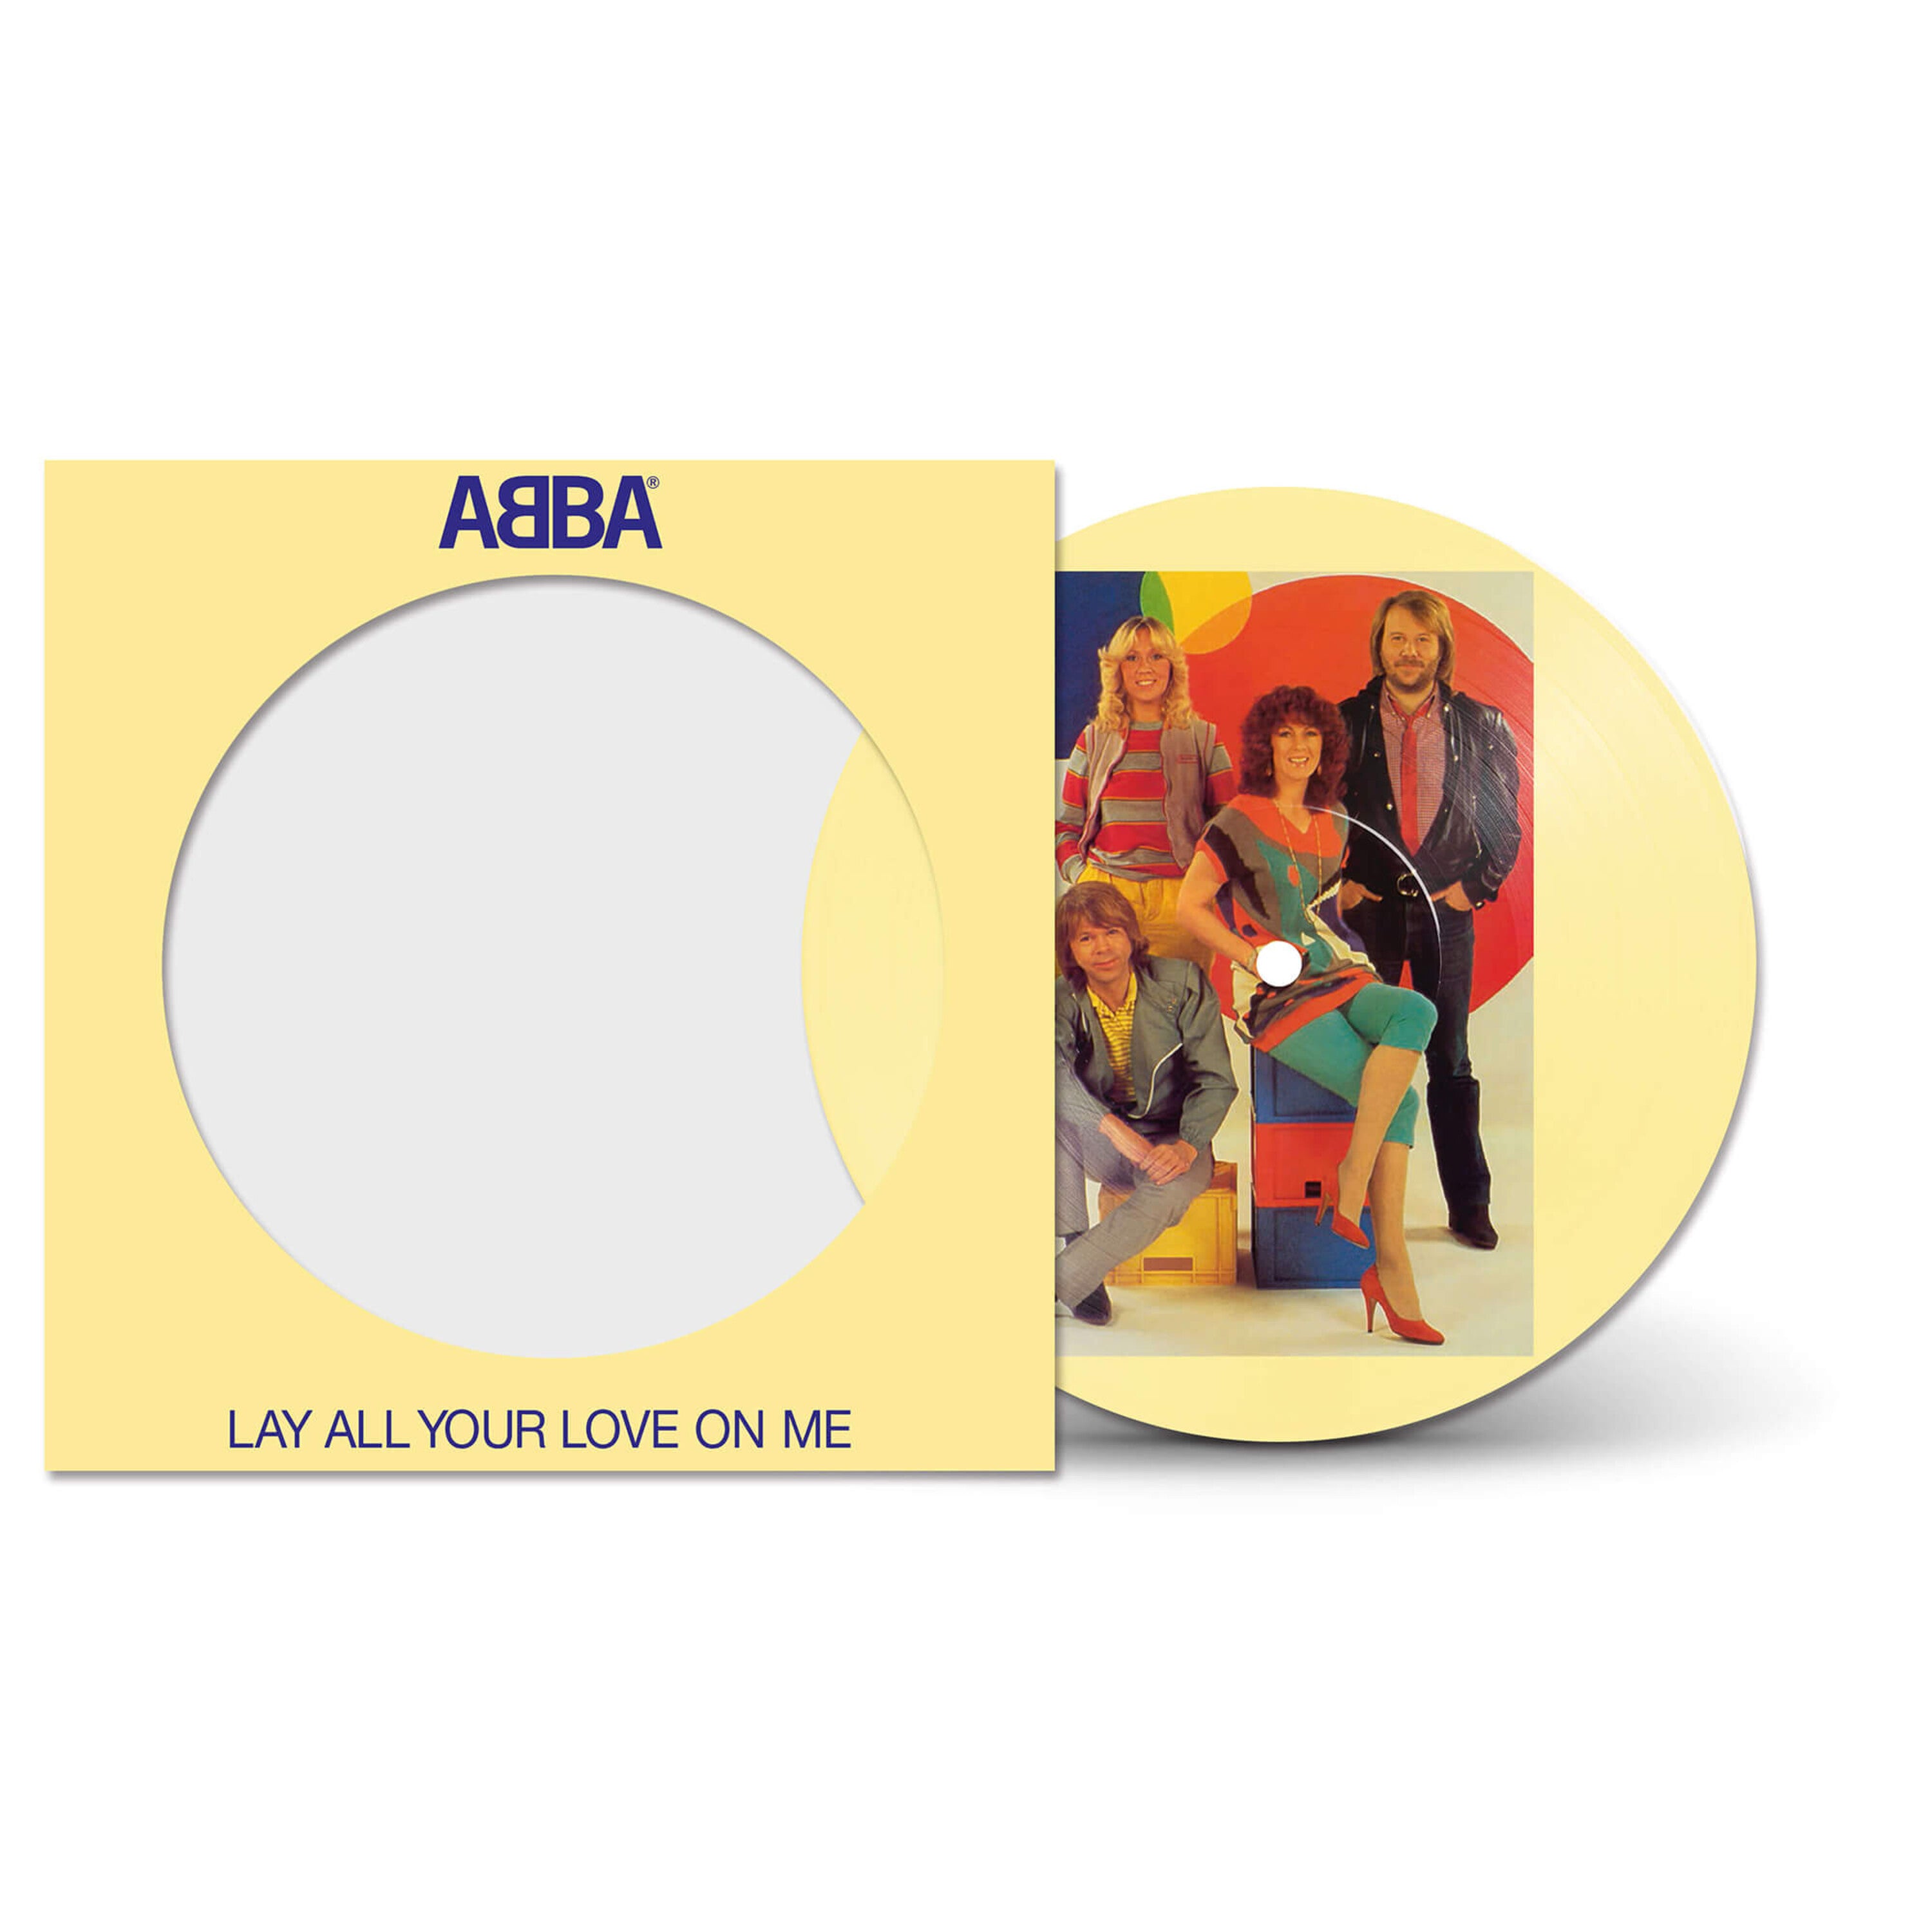 https://images.bravado.de/prod/product-assets/product-asset-data/abba/abba/products/134254/web/297068/image-thumb__297068__3000x3000_original/ABBA-Lay-All-Your-Love-On-Me-40th-Anniversary-Ltd-Picture-Disc-Vinyl-134254-297068.jpg